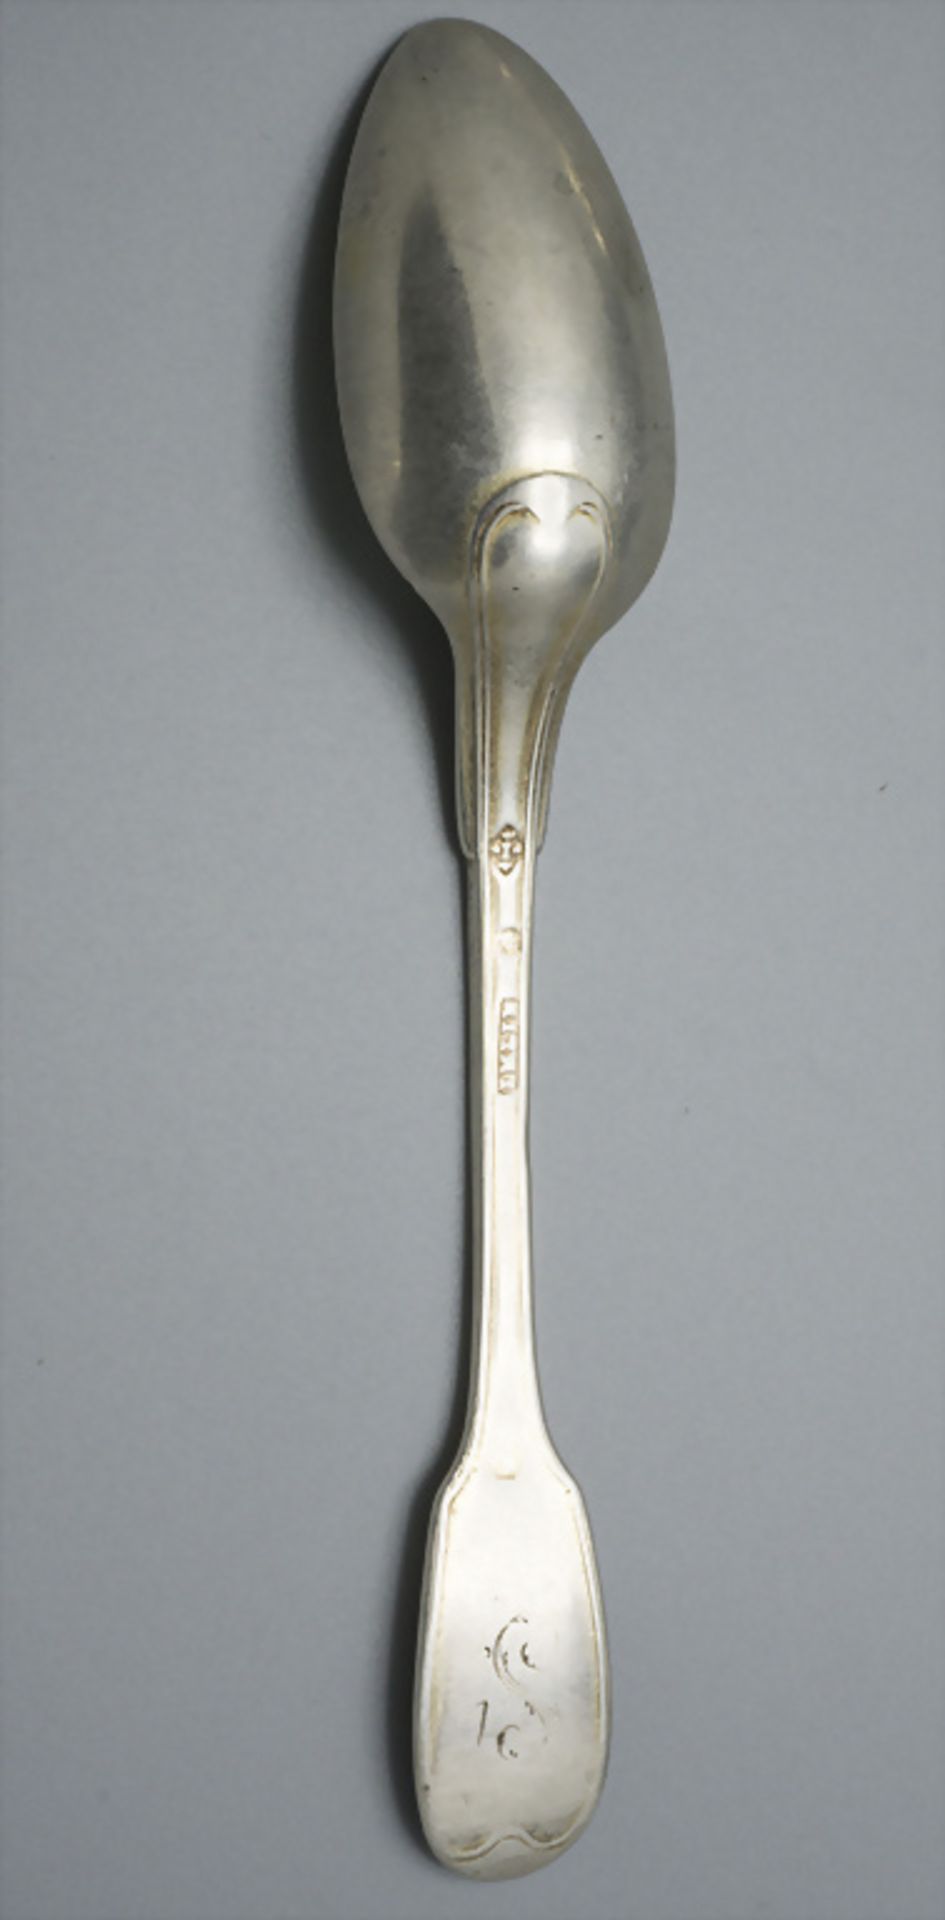 6 Löffel / 6 cuillères en argent massif / 6 silver spoons, Francois Daniel Imlin, Straßburg / ... - Bild 4 aus 5